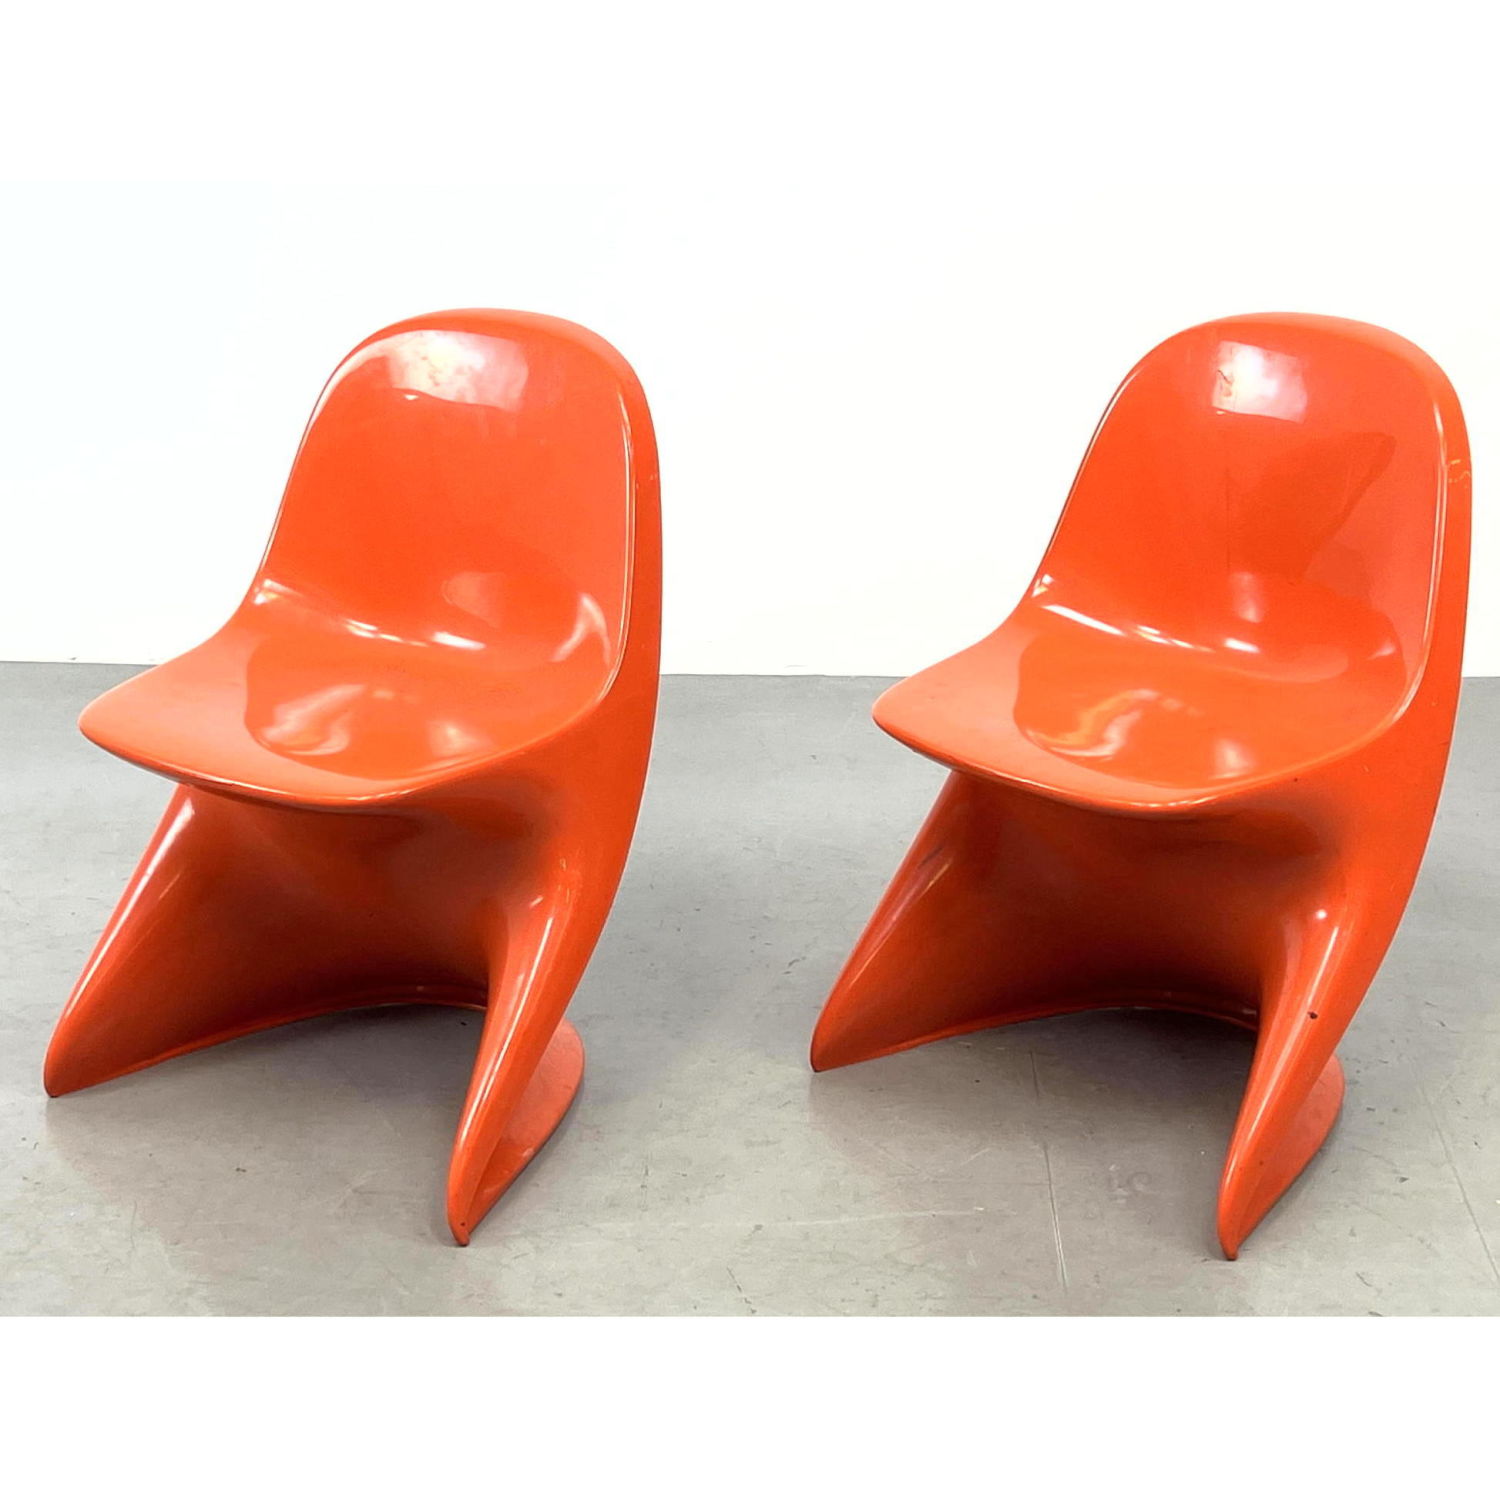 Child's size Caslino I orange Chairs.